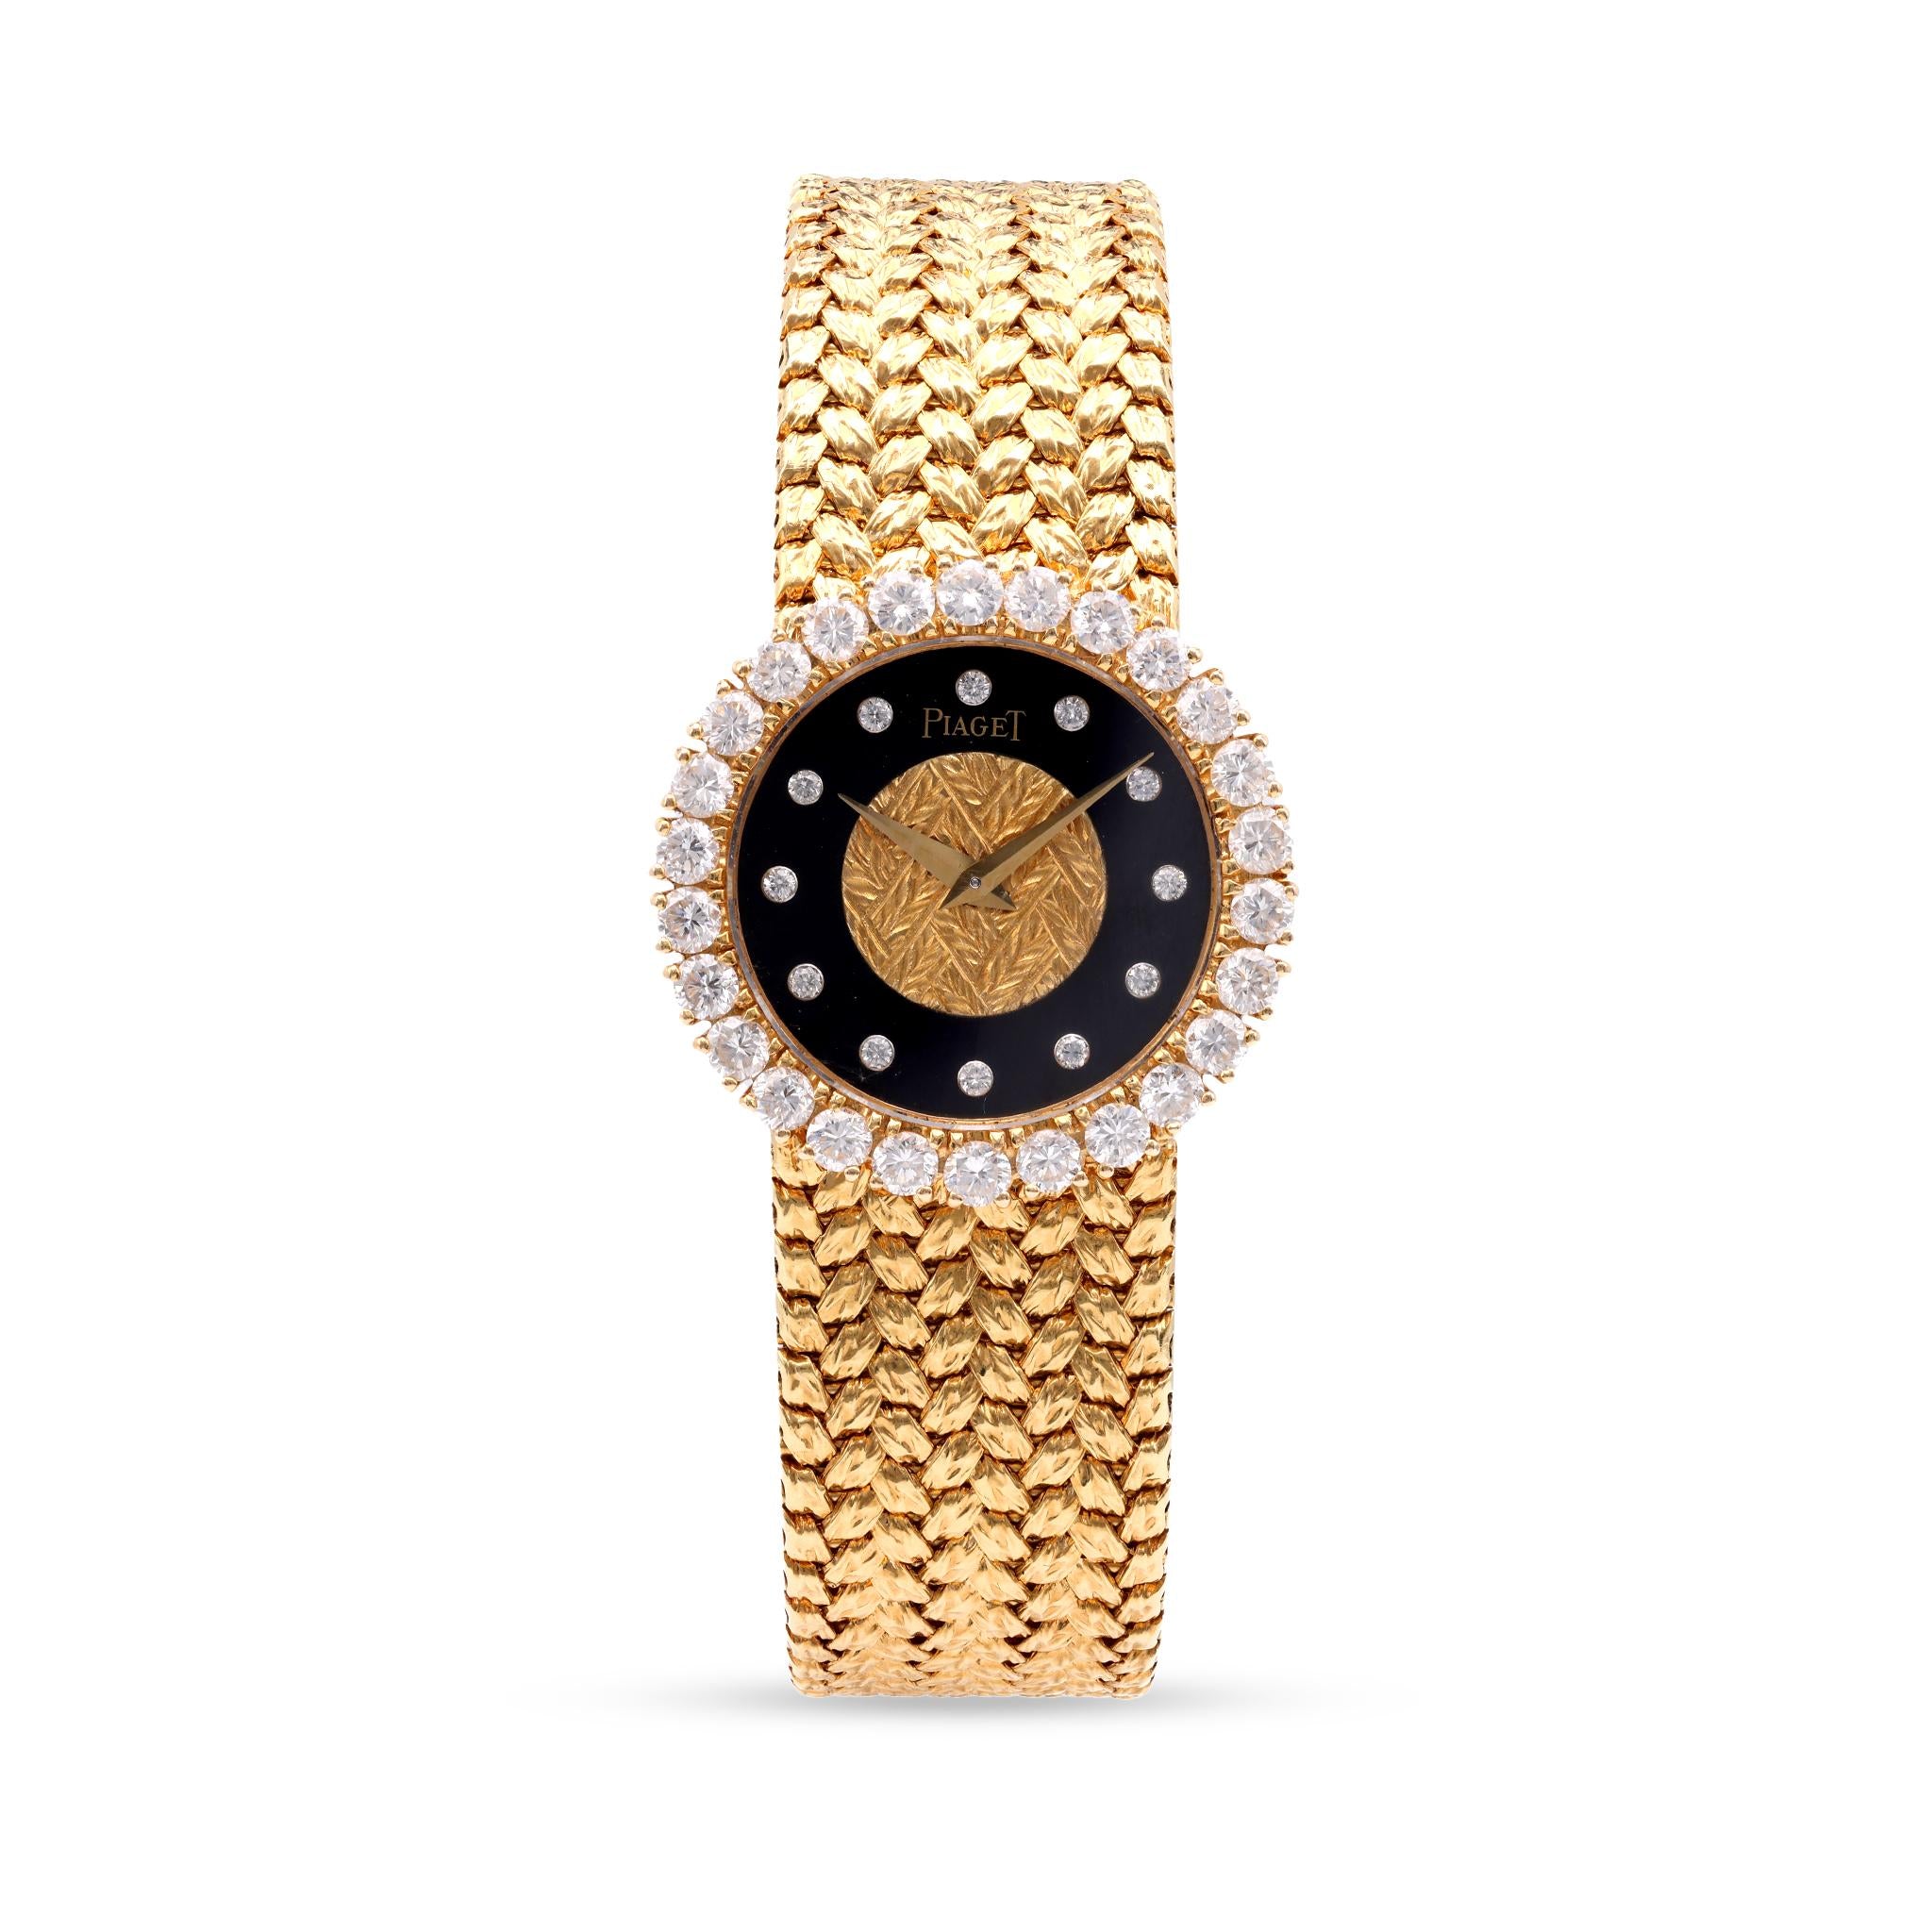 Vintage Piaget Diamond Onyx 18K Yellow Gold Watch  Piaget   